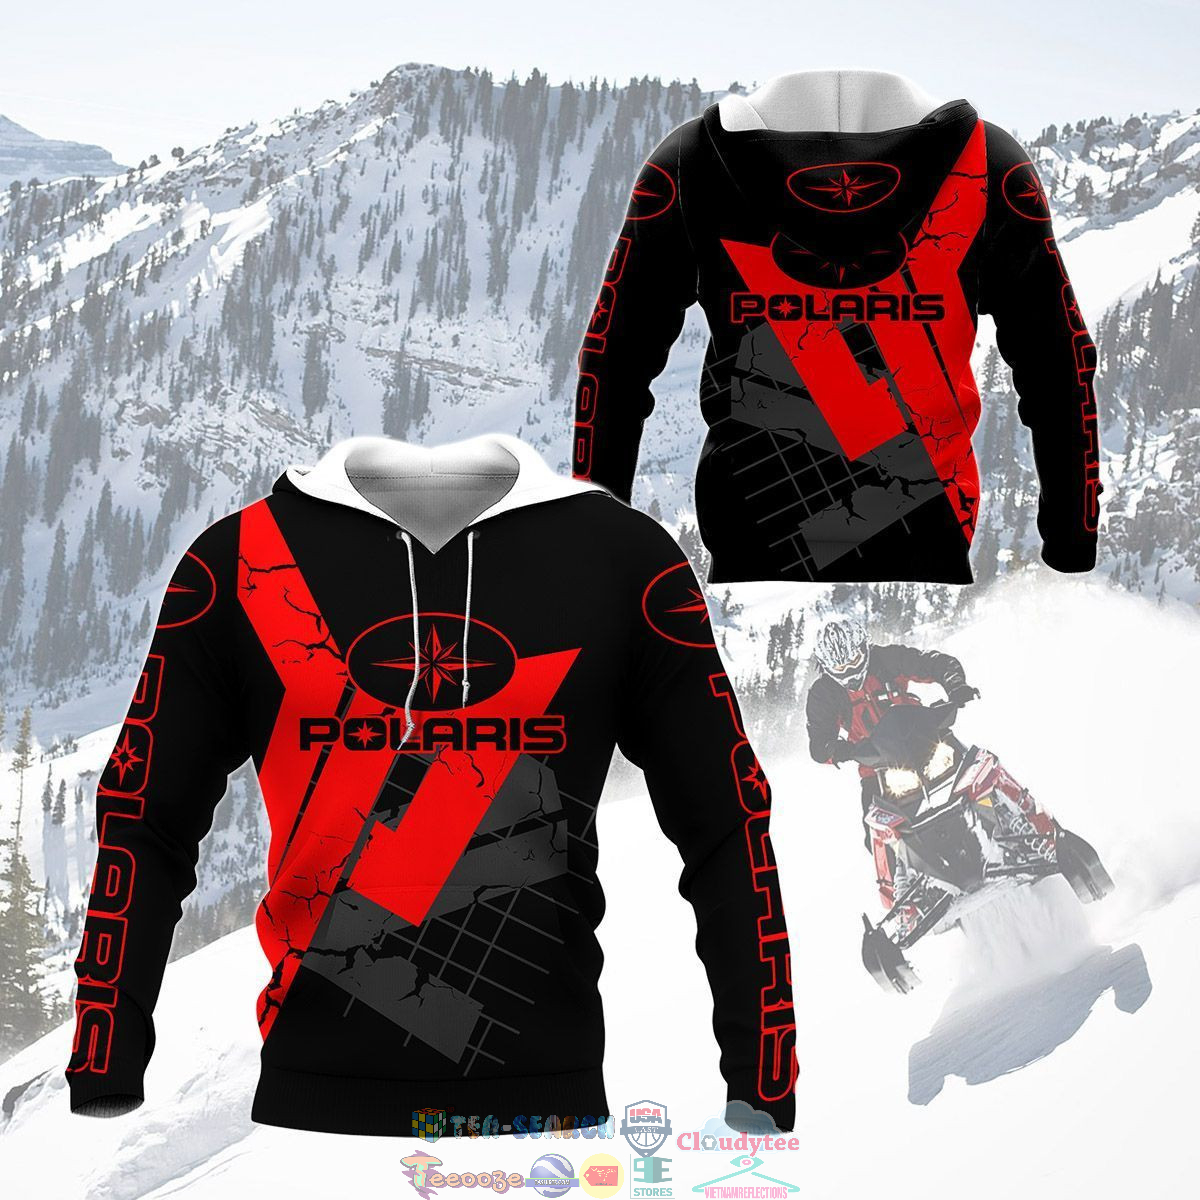 Polaris ver 10 3D hoodie and t-shirt – Saleoff